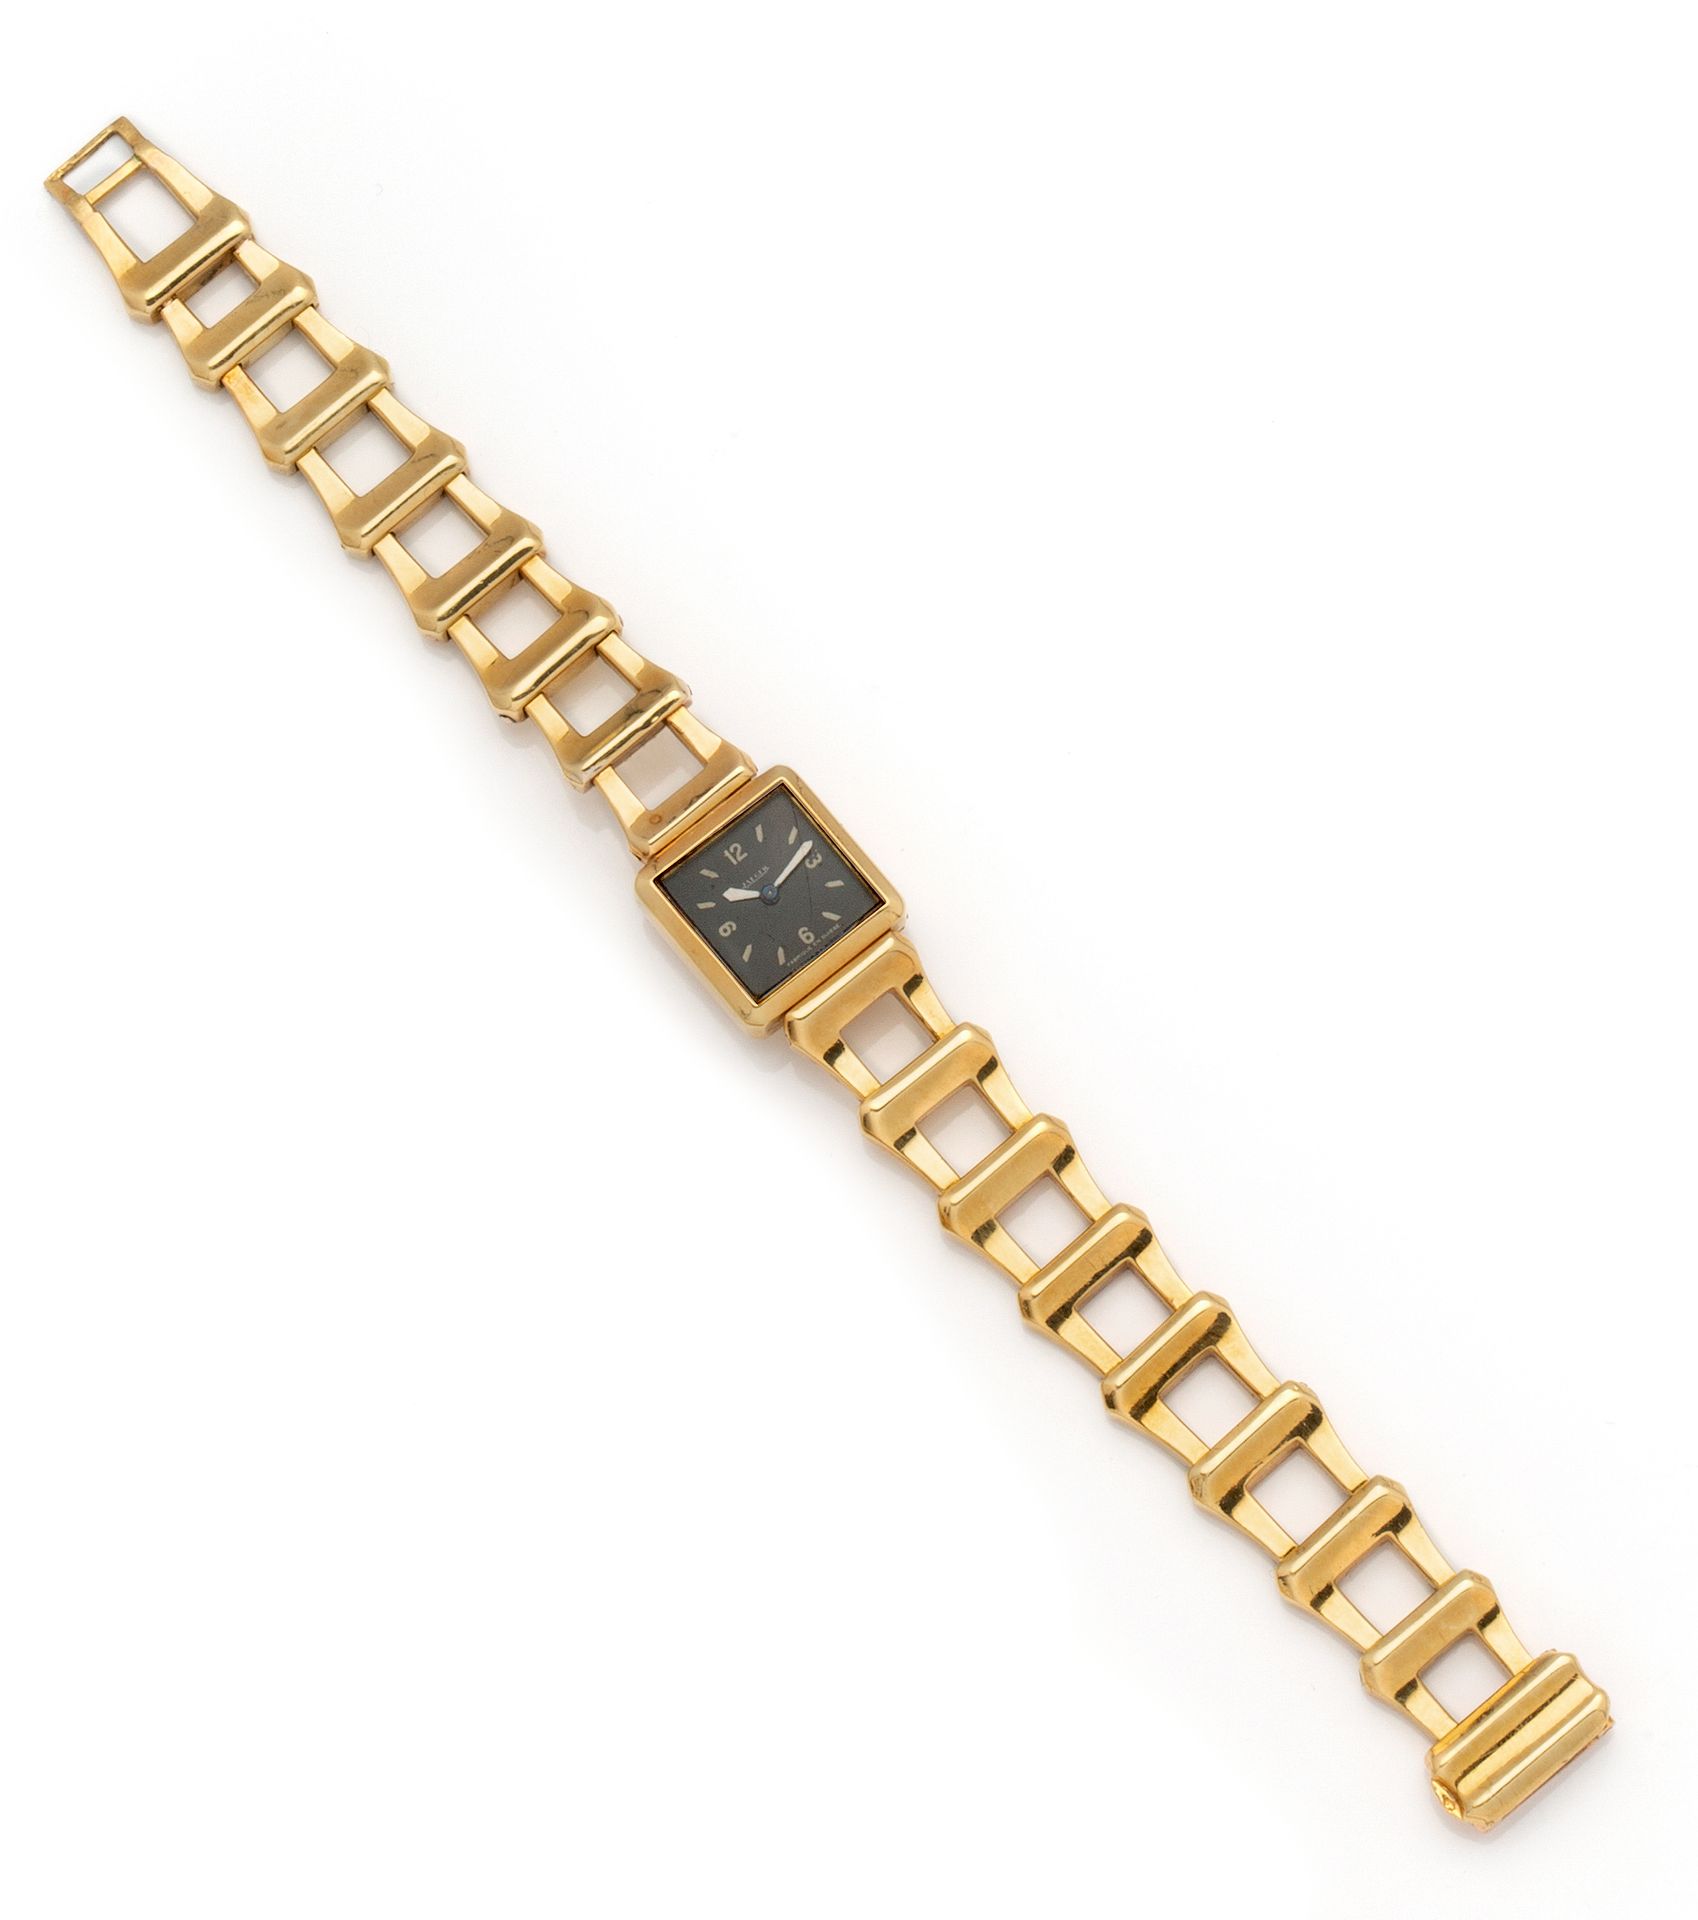 Null Jaeger for Hermès

18K黄金750千分之一的女士腕表，配备机械机芯。

- 方形黄金表壳，光滑表圈，表壳背面有凹槽表冠，螺丝固定的&hellip;